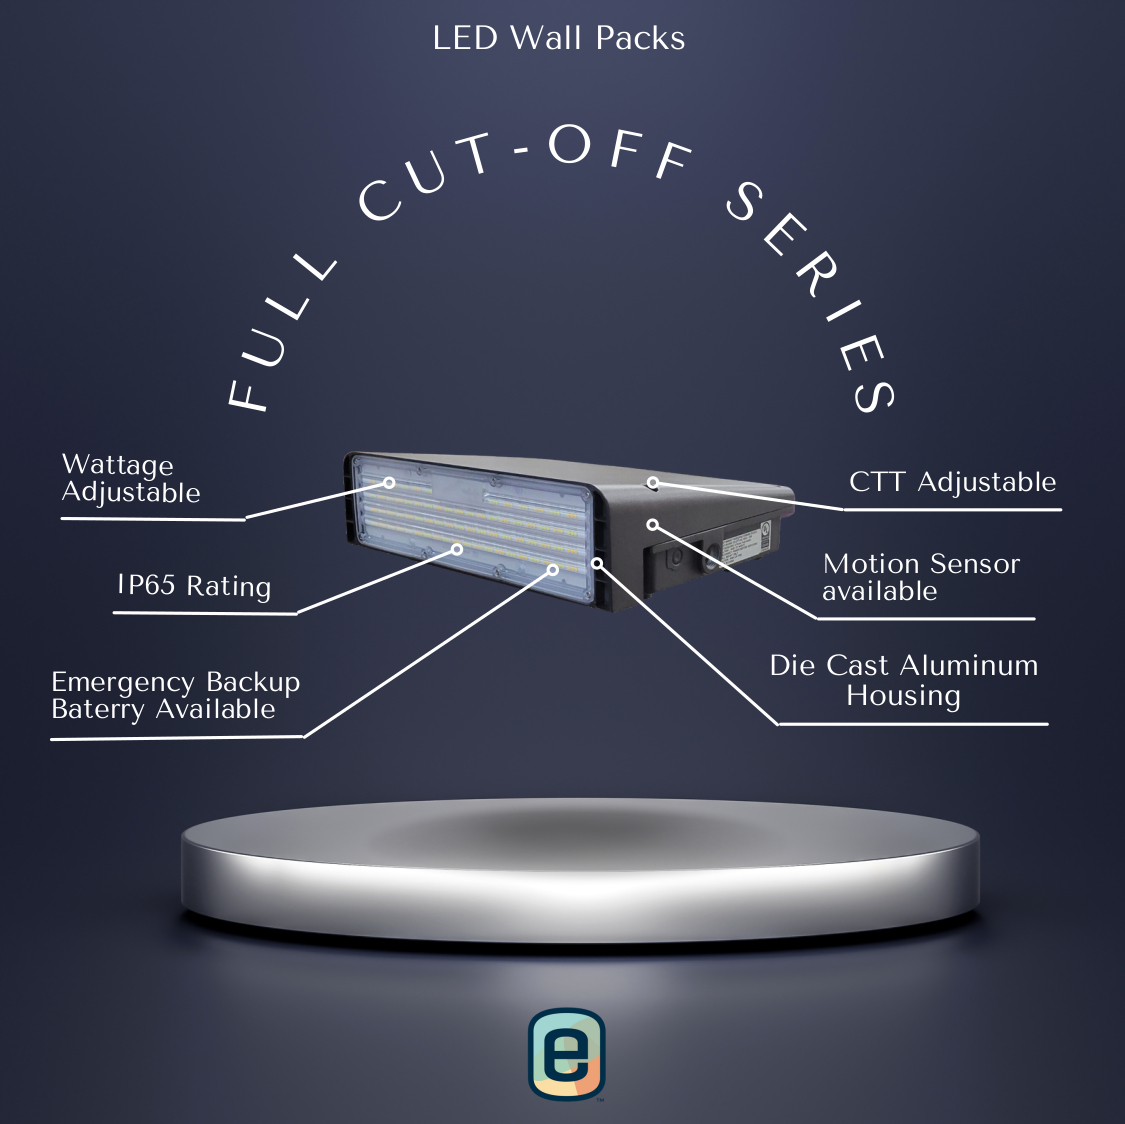 LED Wall Packs: Full Cut-Off Series